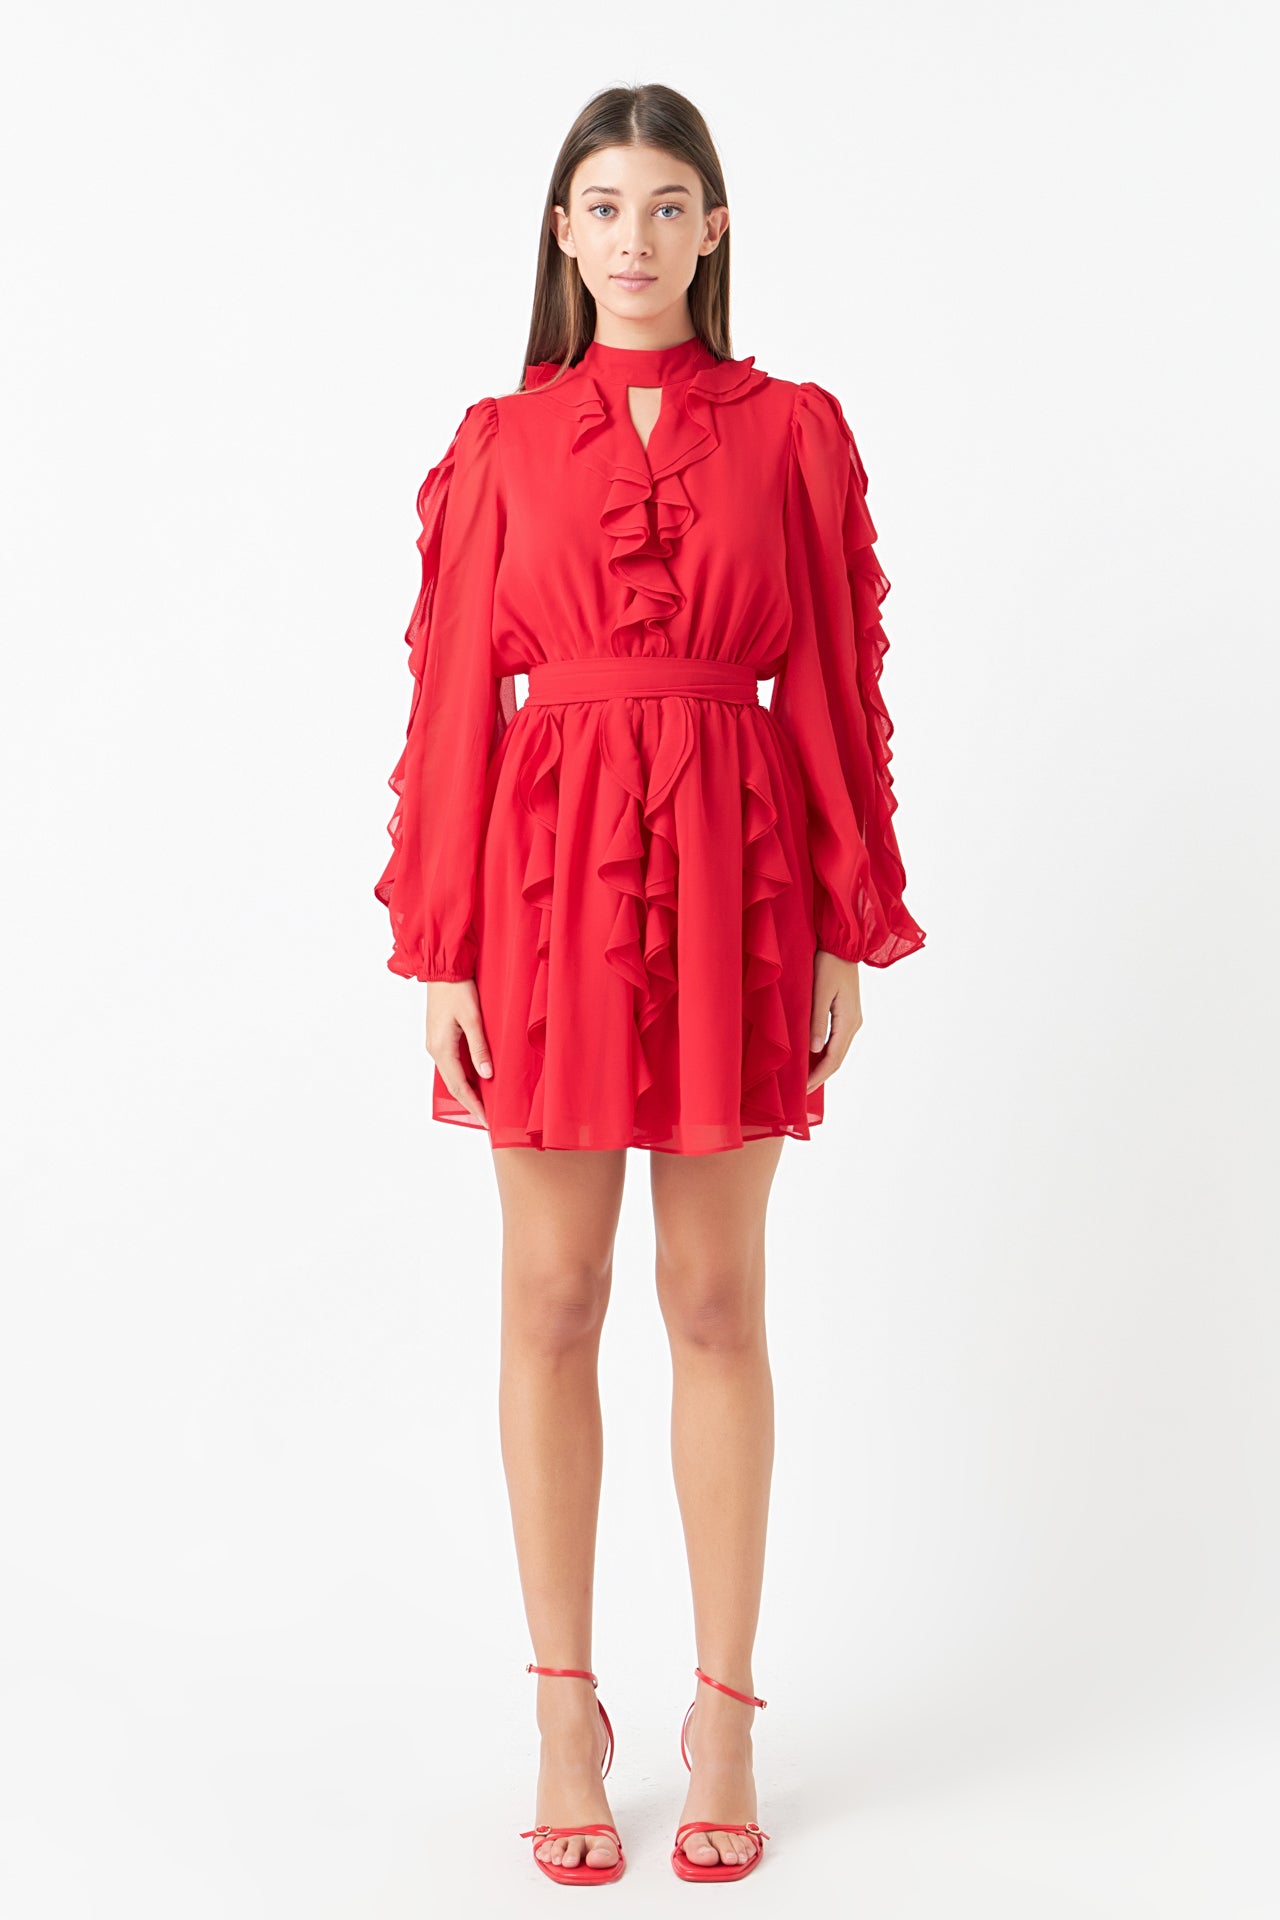 ENDLESS ROSE - Chiffon Ruffled V Mini Dress - DRESSES available at Objectrare